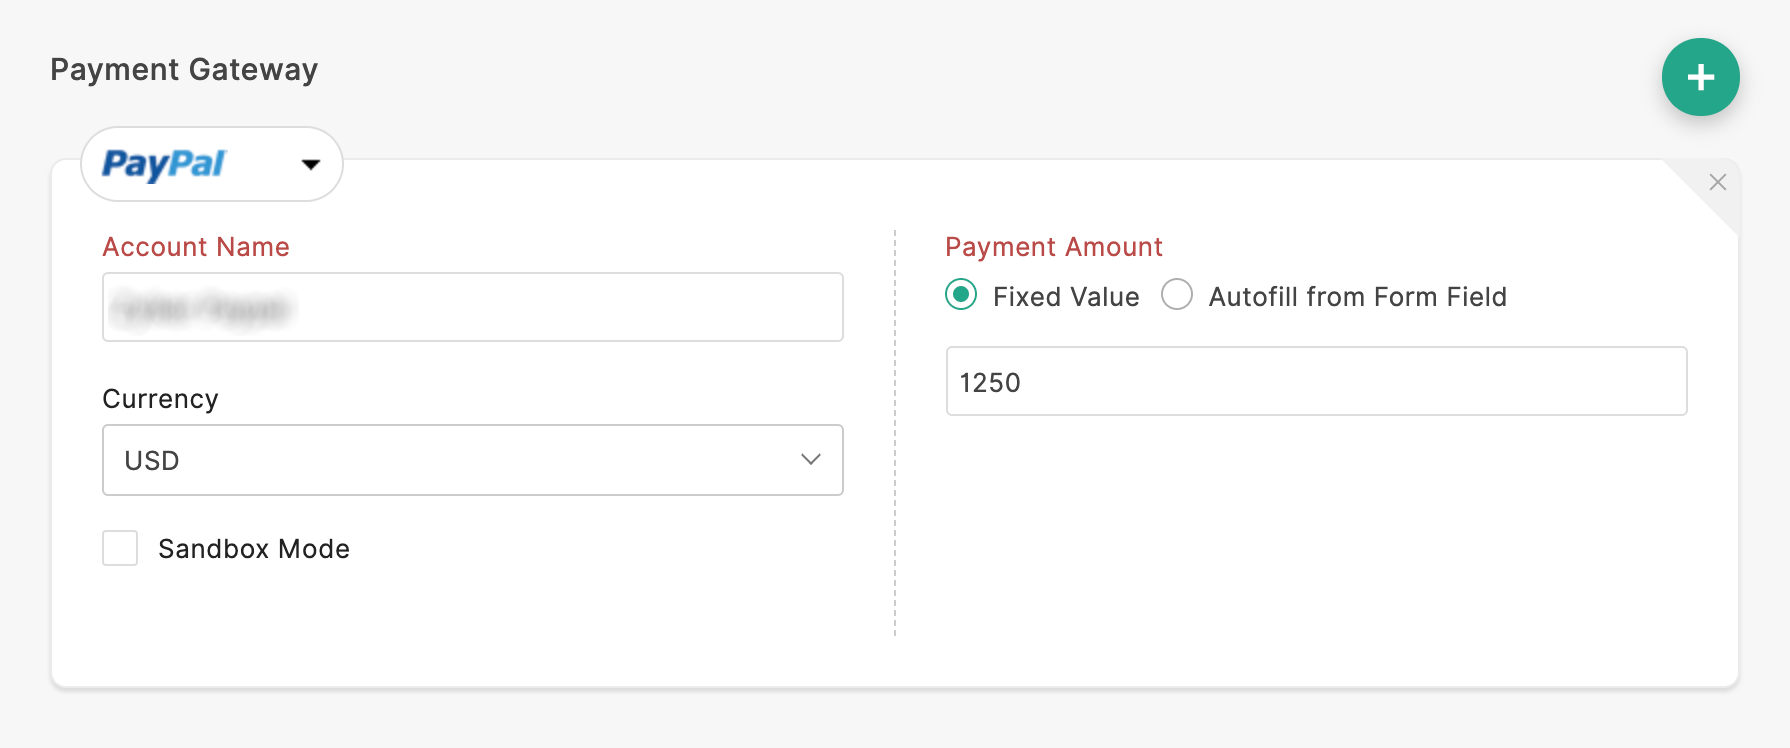 PayPal Payment Gateway configuration